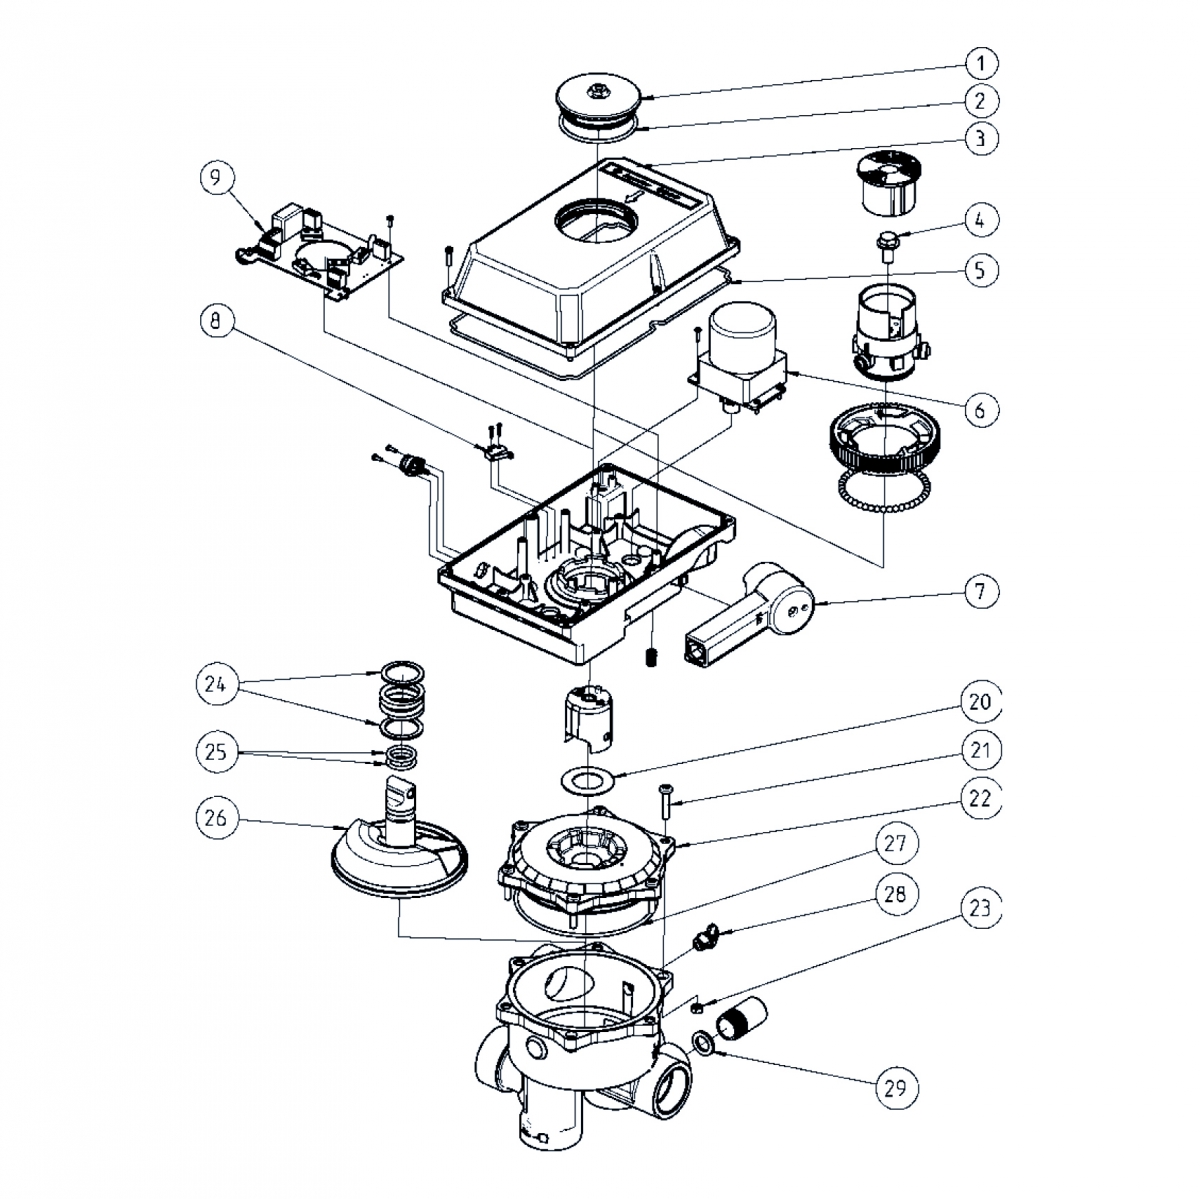 Spare part kit for Aquastar mp6 plc circuit board 230V Spare part kit for Aquastar mp6 plc circuit board 230V